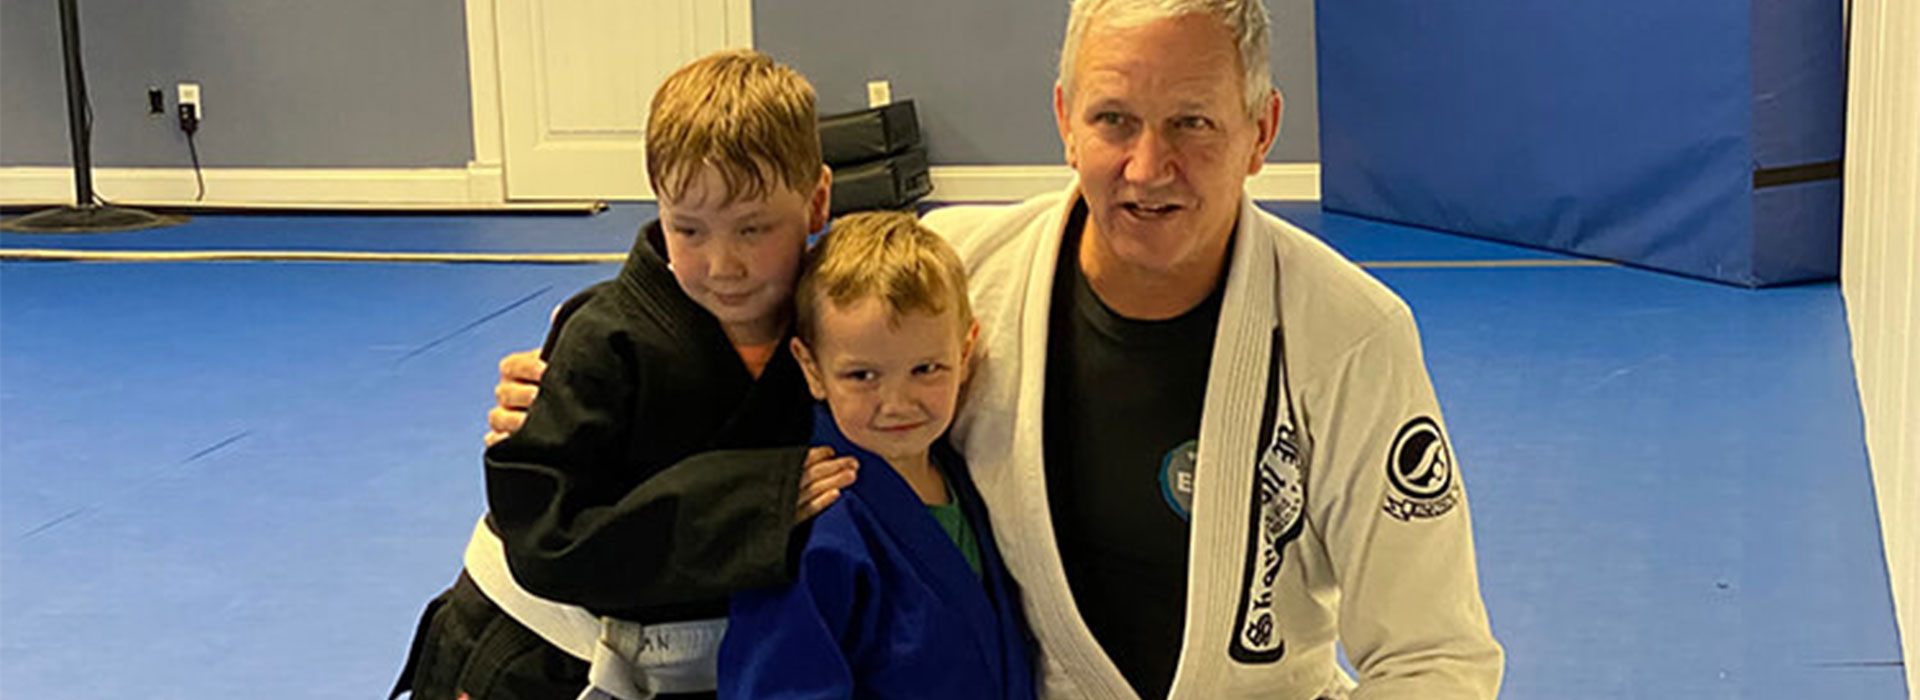 Brazilain Jiu-Jitsu Classes For Kids Near Thomasville, NC